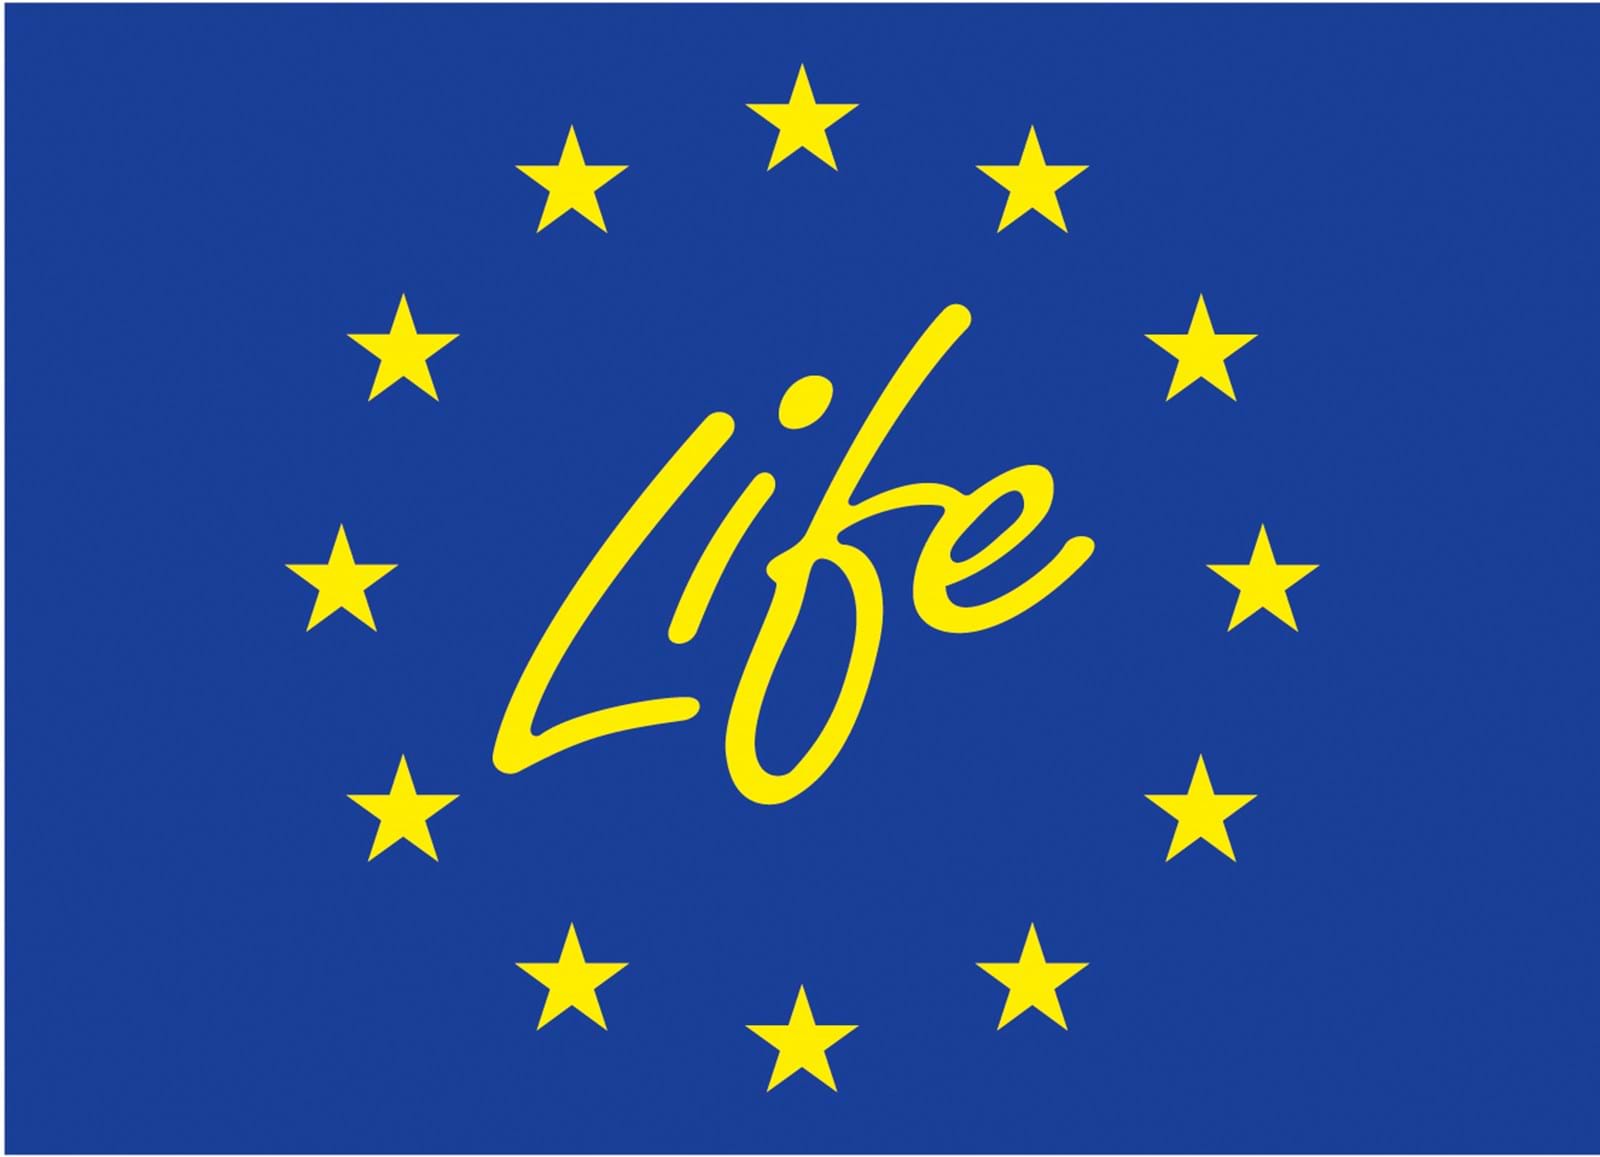 Logo "life"